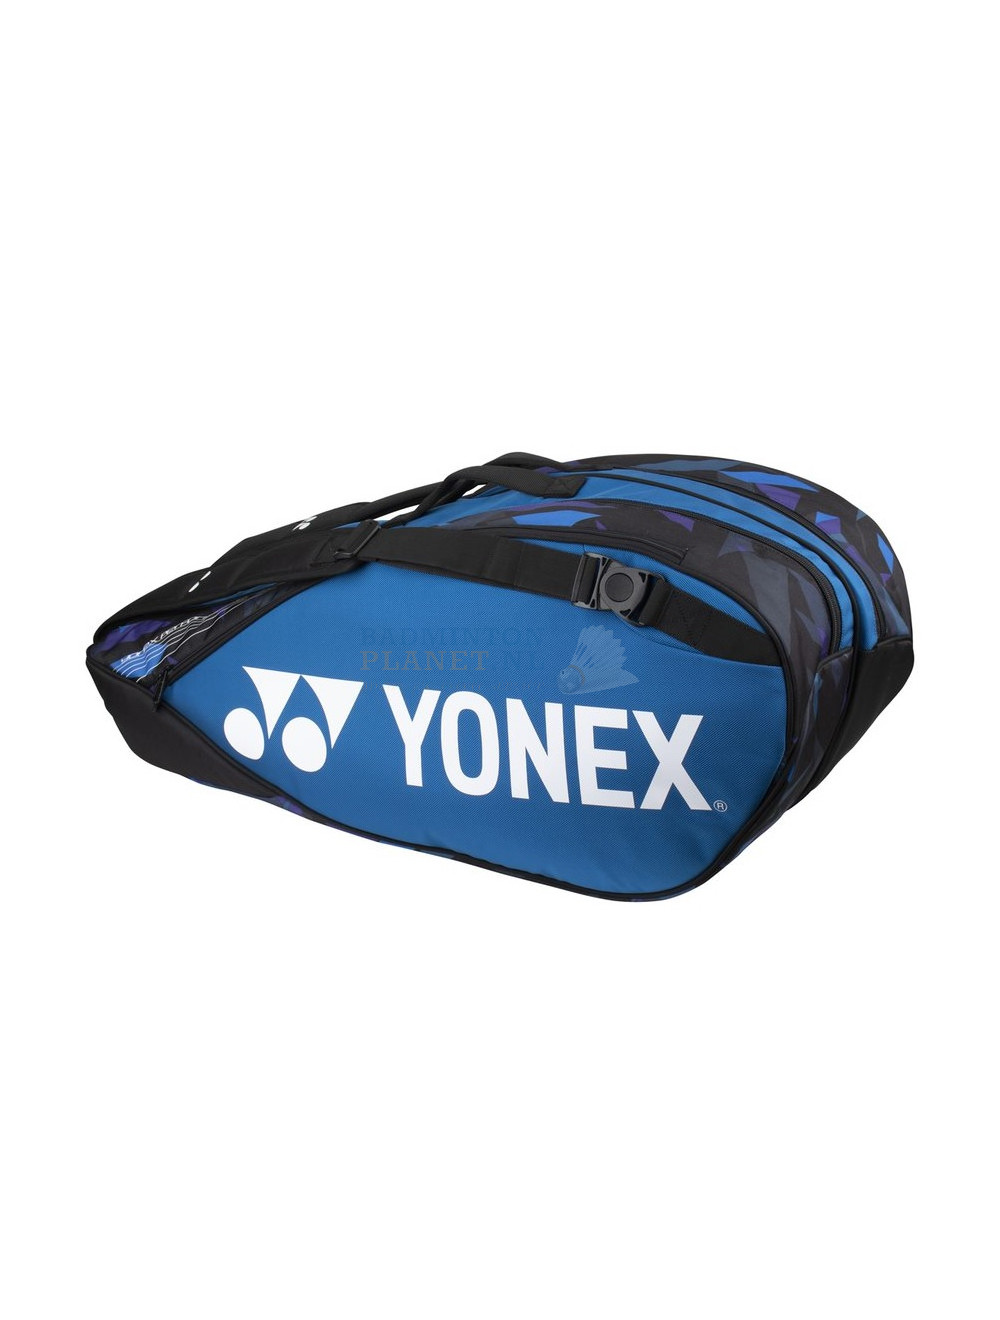 Yonex Pro 92226EX Blue badmintontas kopen? Badmintonplanet.nl